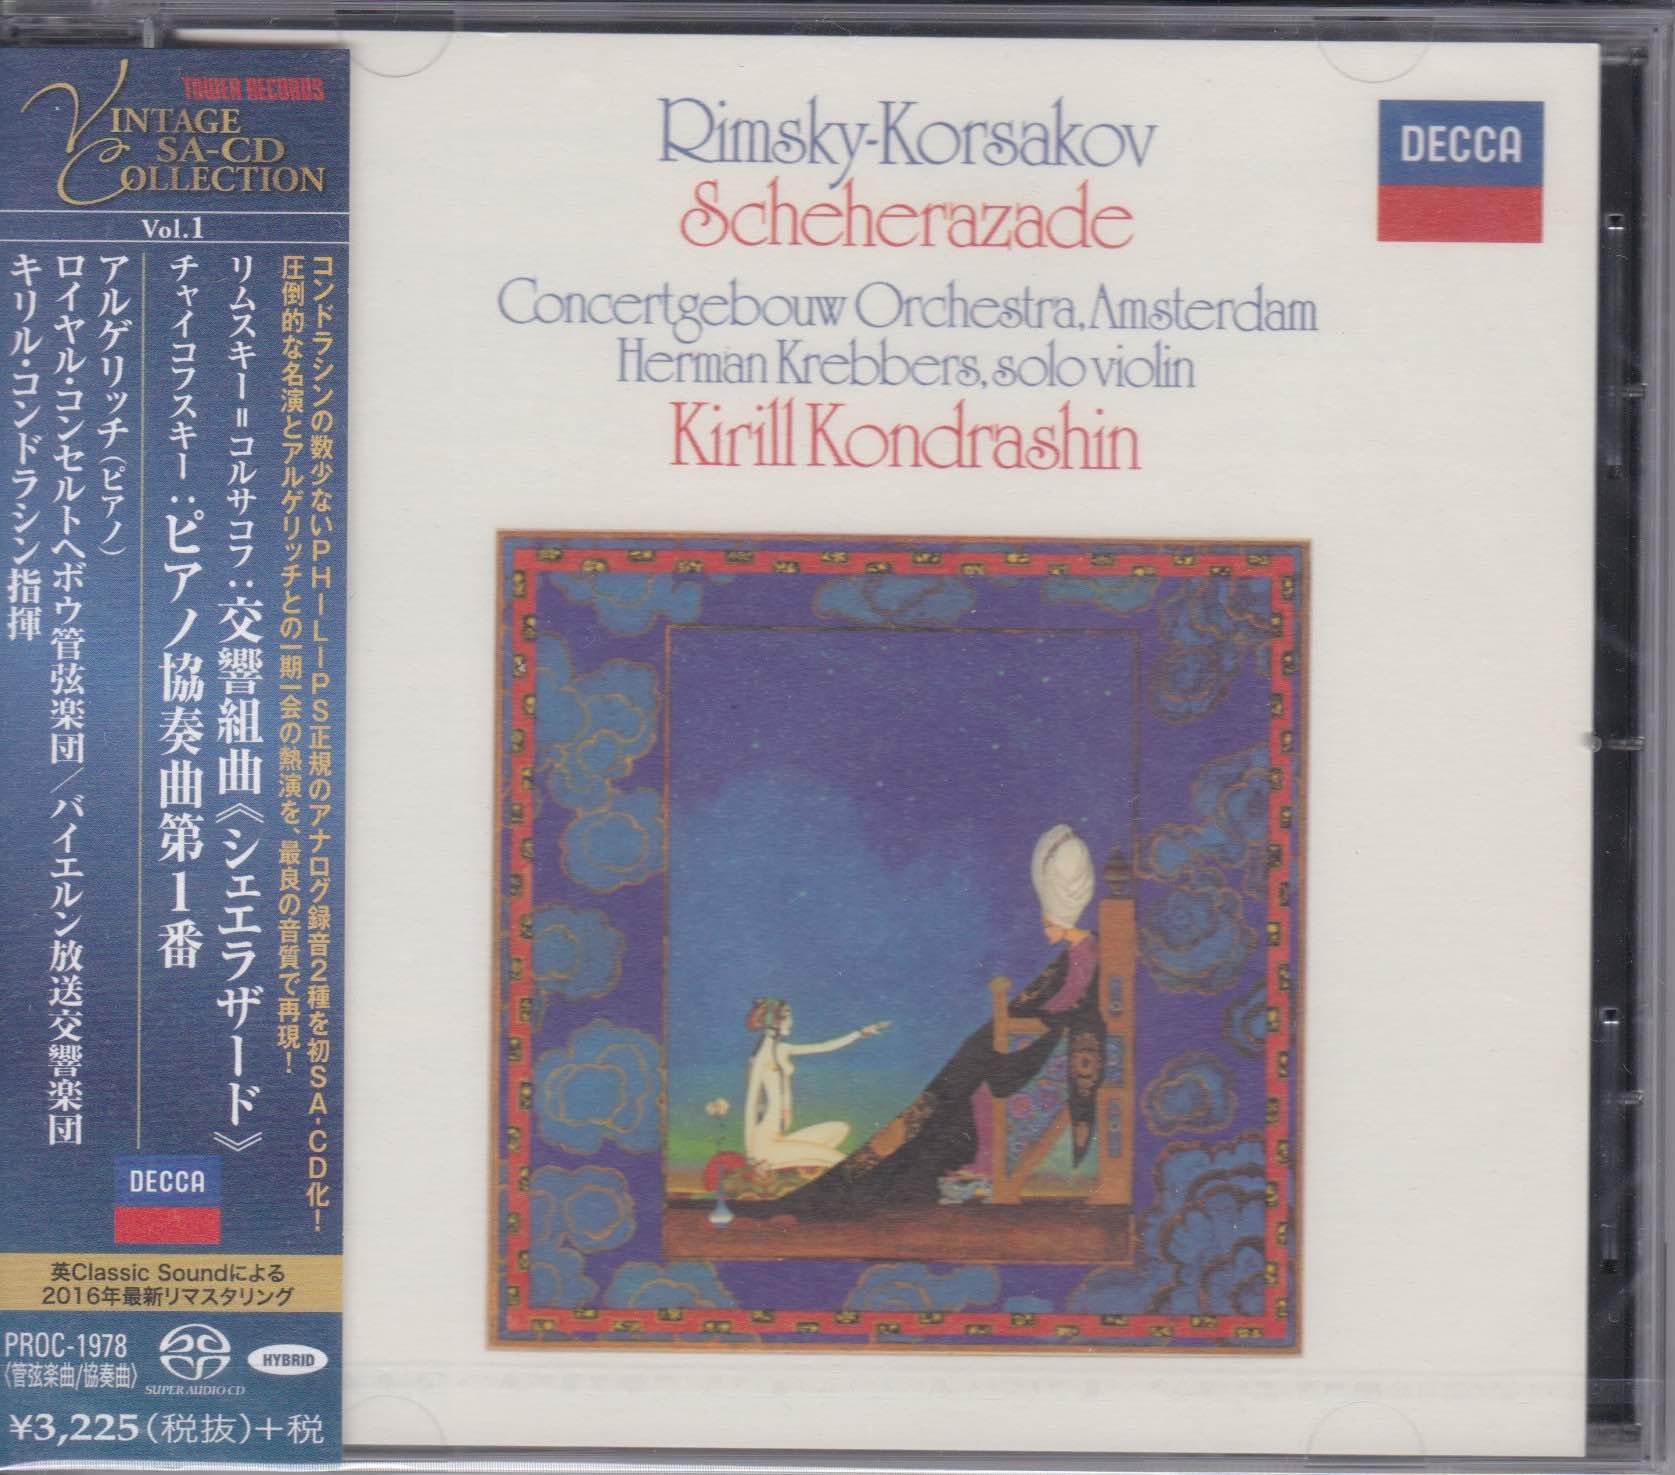 Rimsky-Korsakov - Scheherazade  /  Piano concerto No.1 B flat minor